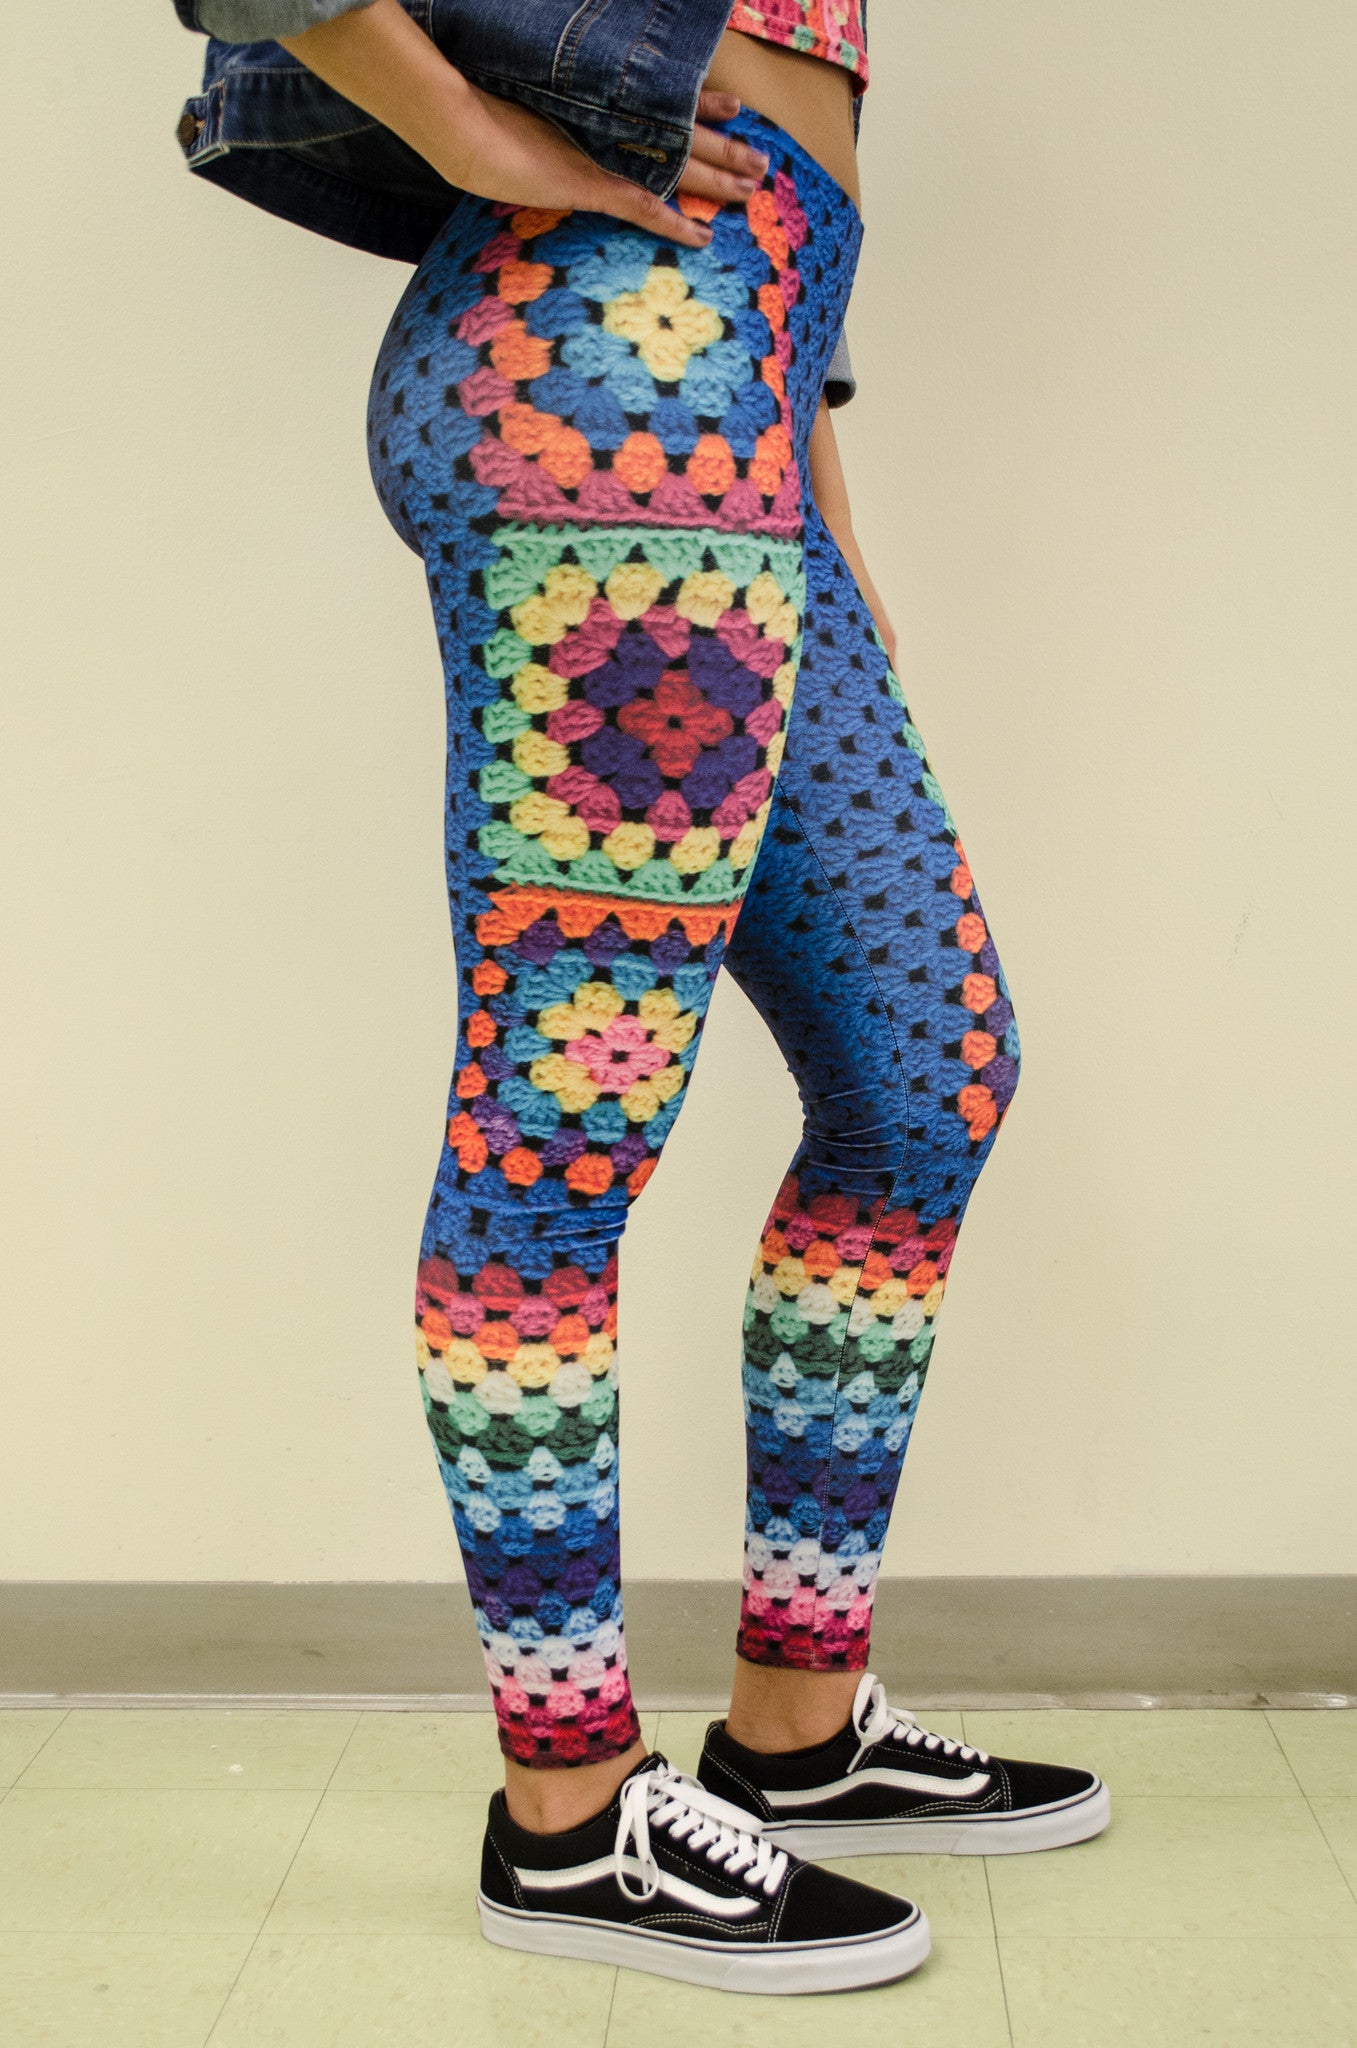 Beulah' Rainbow Granny Square Crochet Print Leggings – Snapdragon